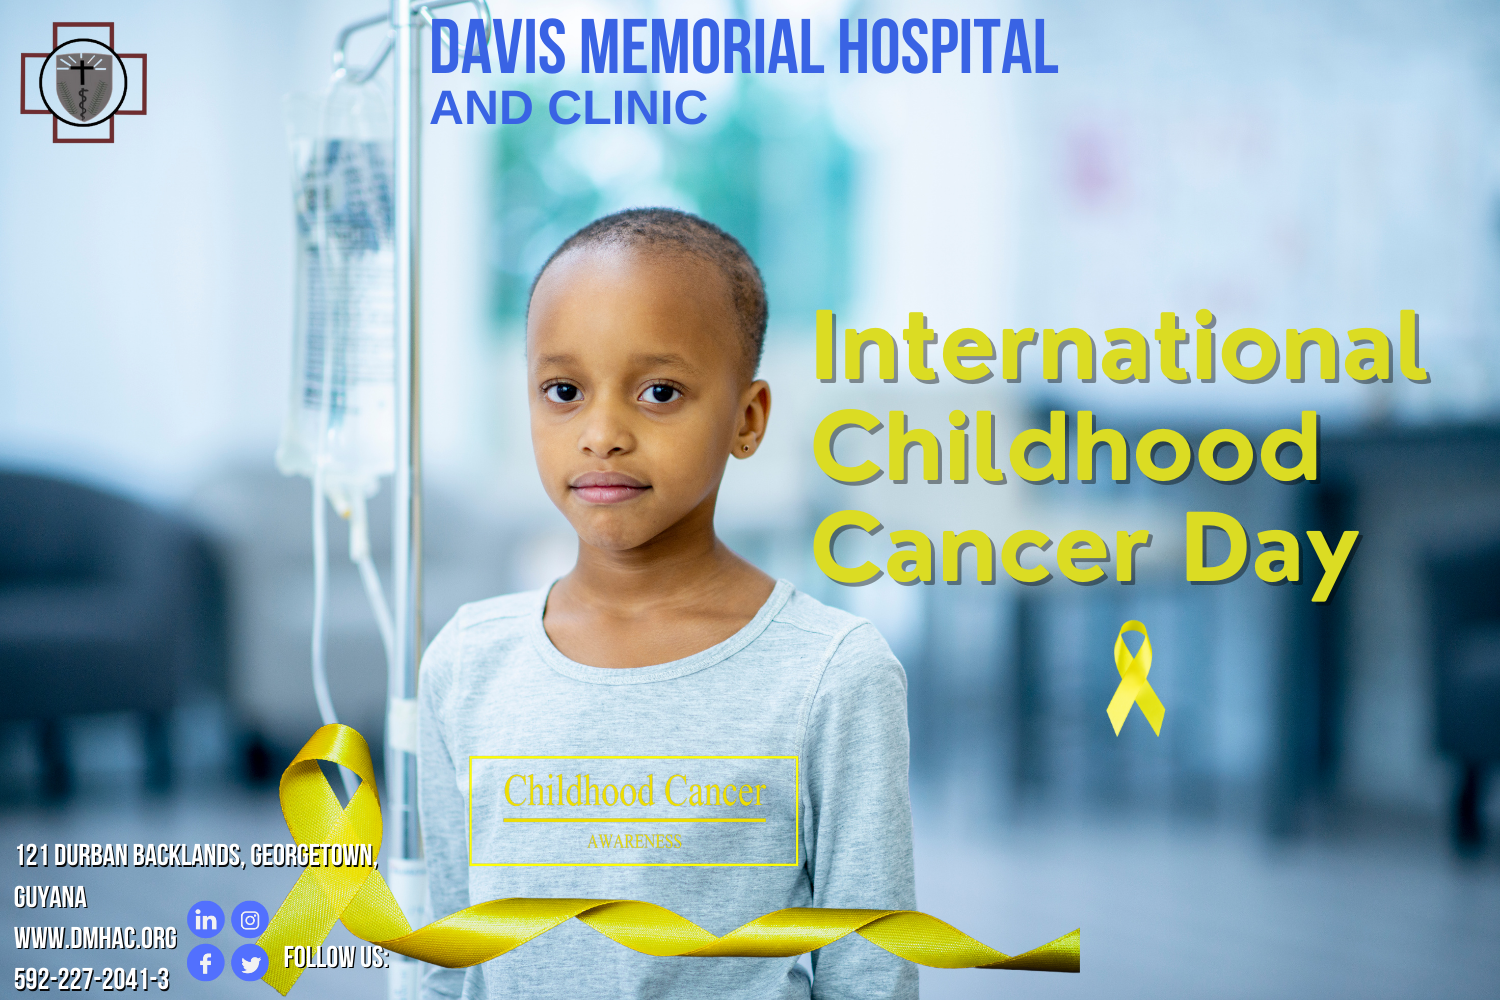 International Childhood Cancer Day Davis Memorial Hospital & Clinic